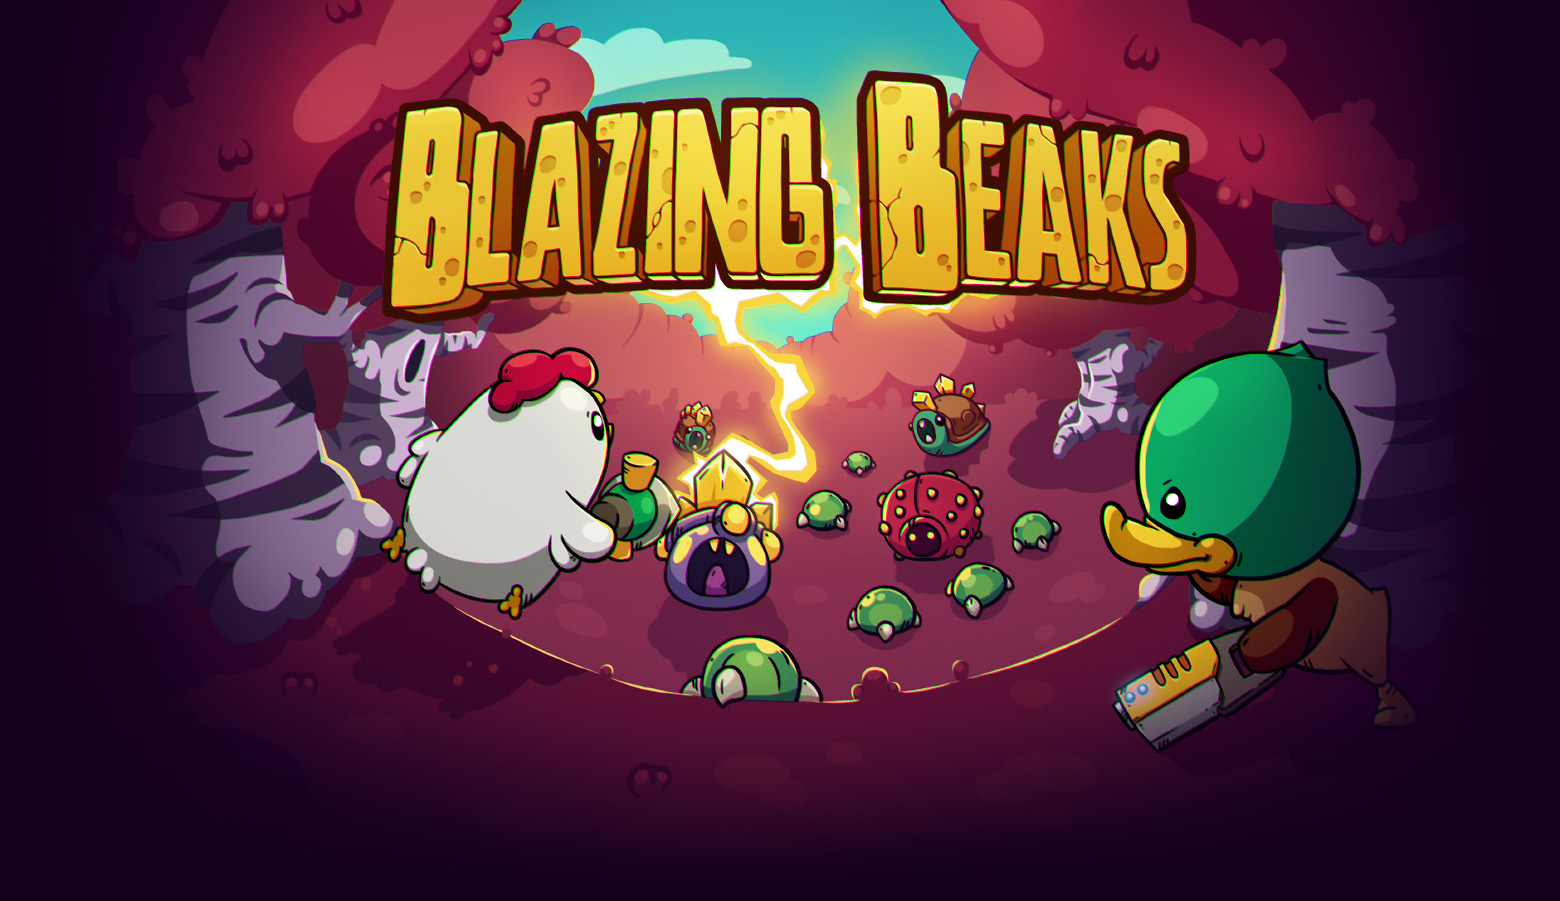 for ios download Blazing Beaks